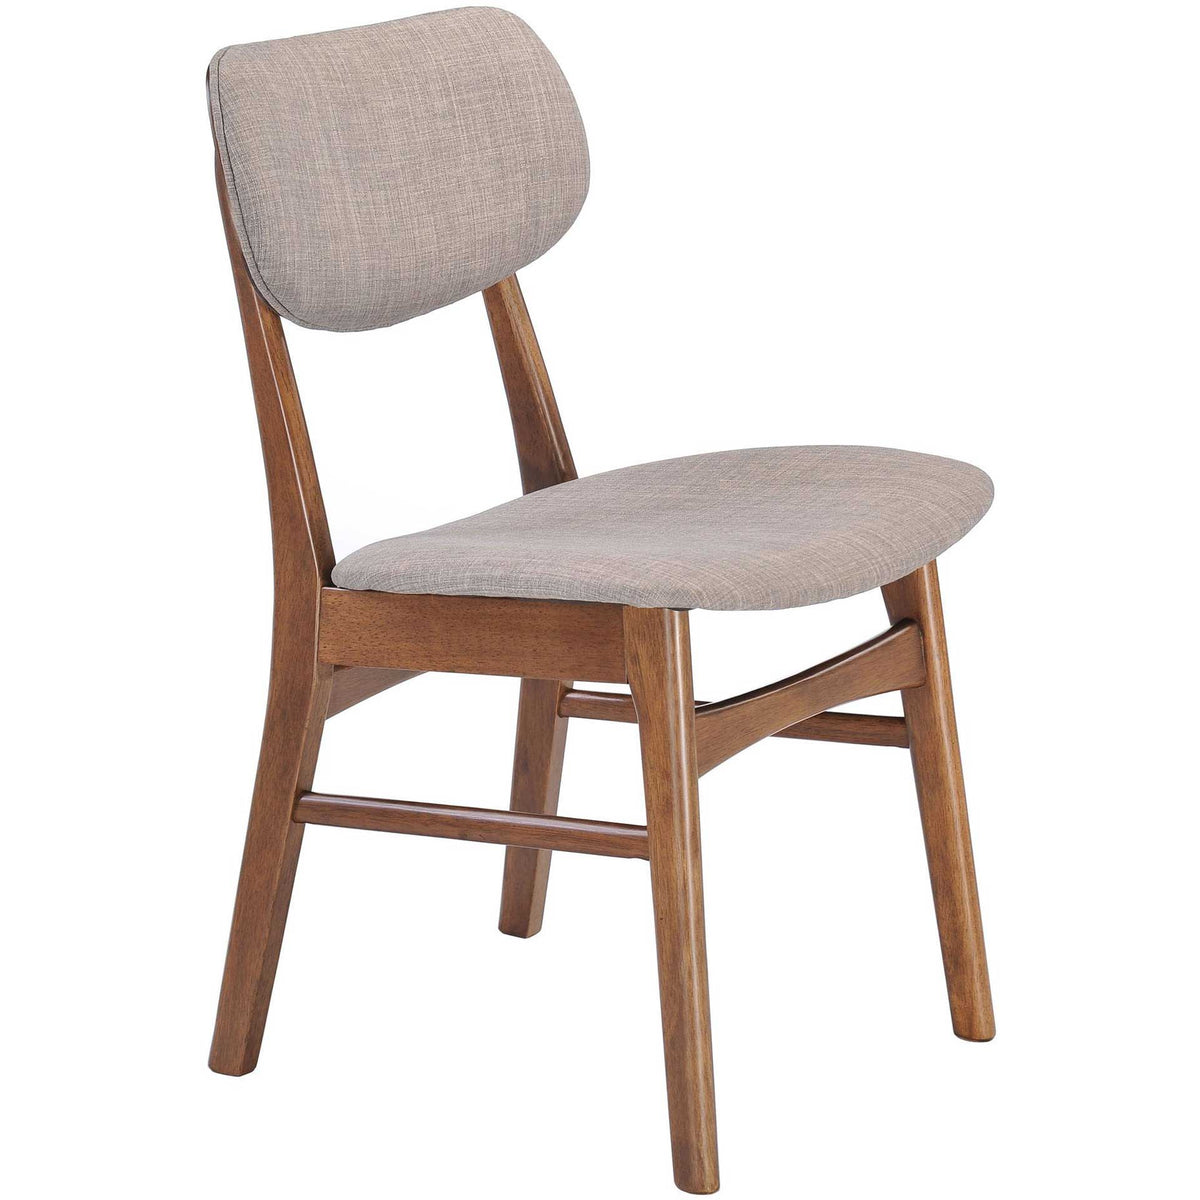 Midland Chair Dove Gray (Set of 2)